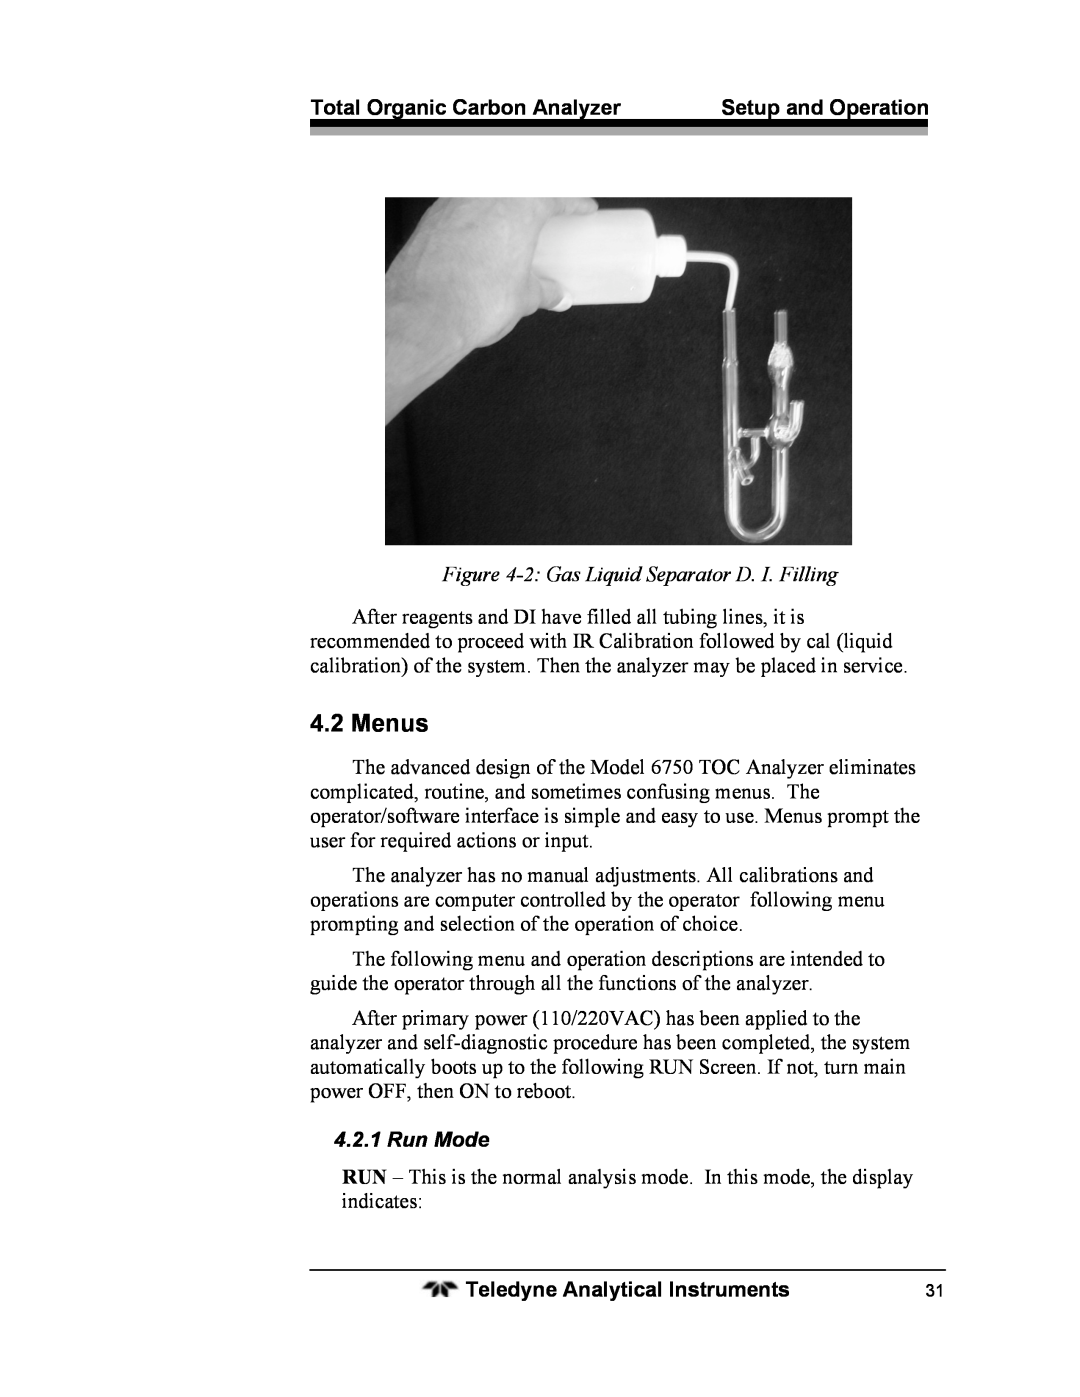 Teledyne 6750 operating instructions Menus, 2:Gas Liquid Separator D. I. Filling, Run Mode 